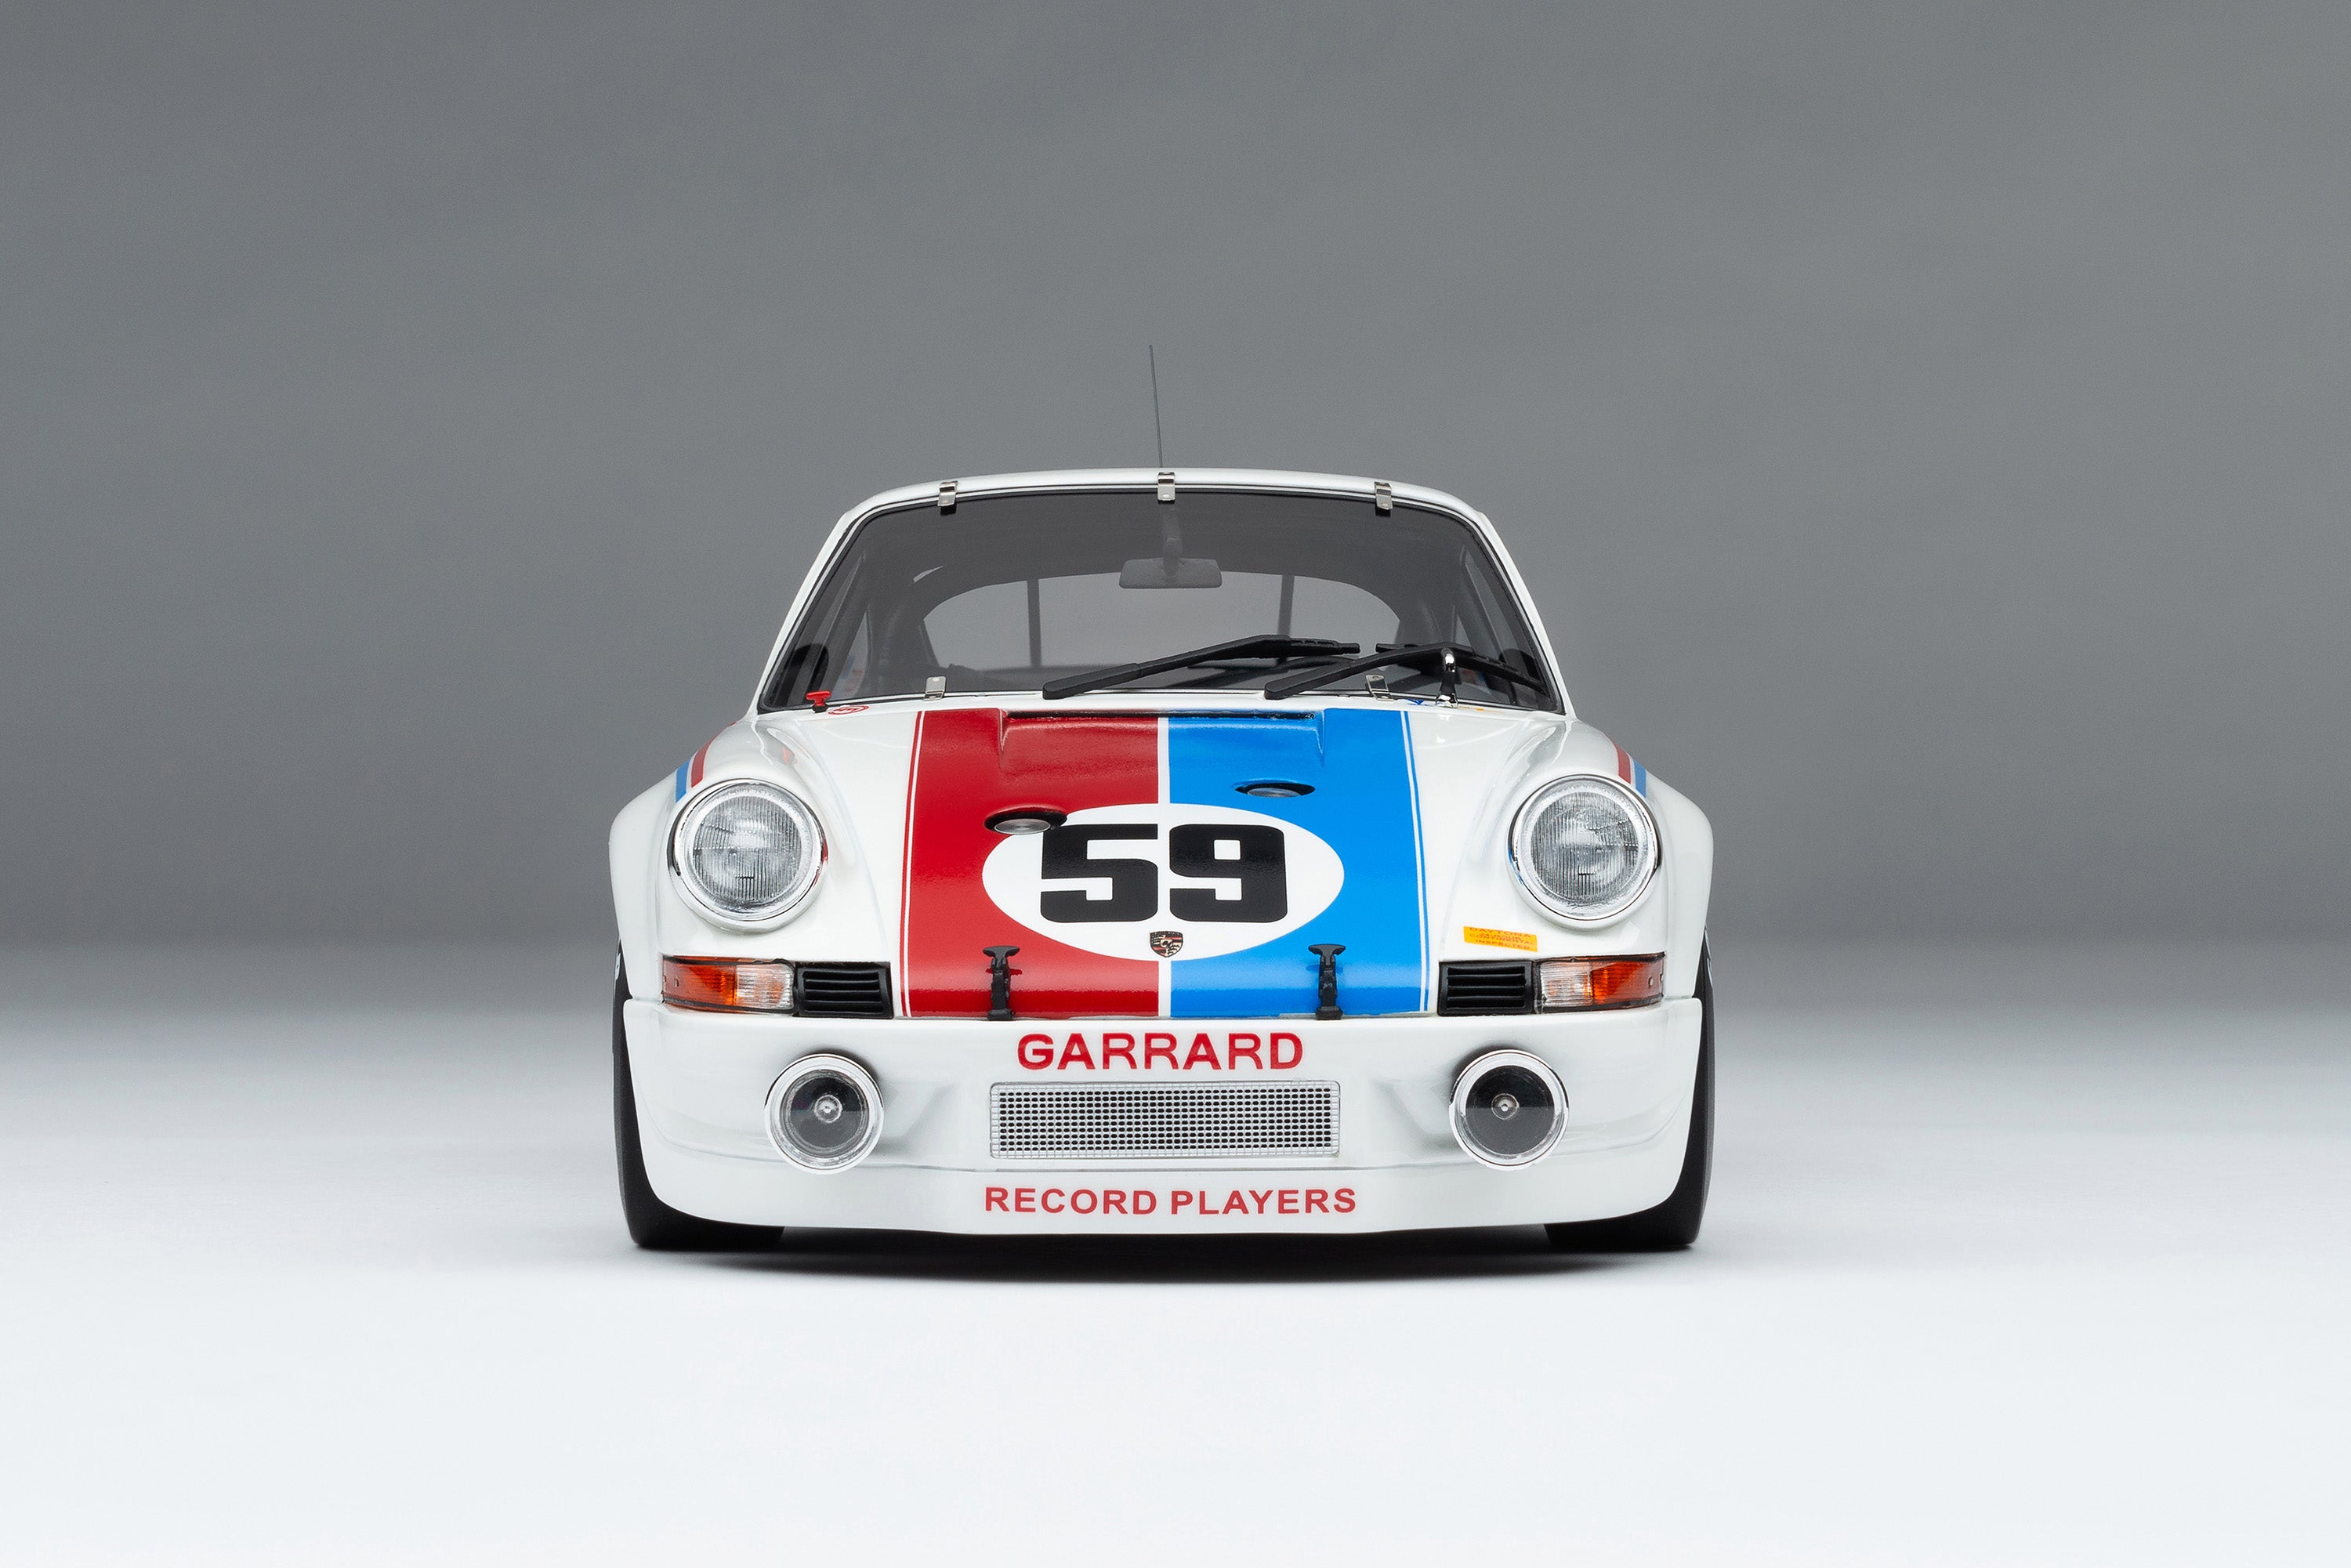 Porsche 911 RSR 2.8 - 1973 Daytona - Brumos Livery - Signed 